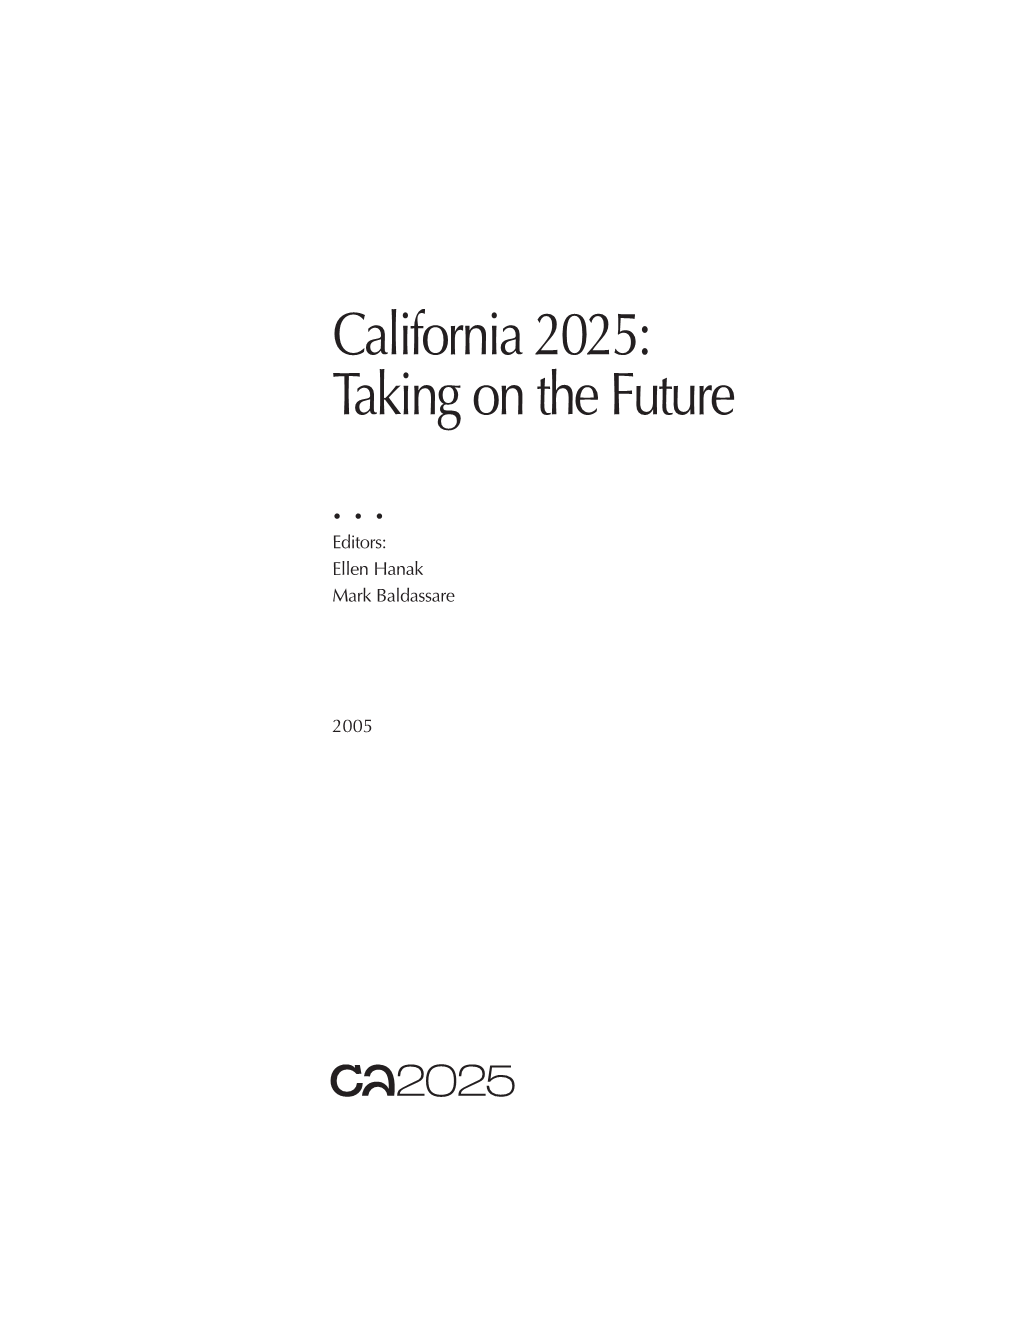 California 2025: Taking on the Future